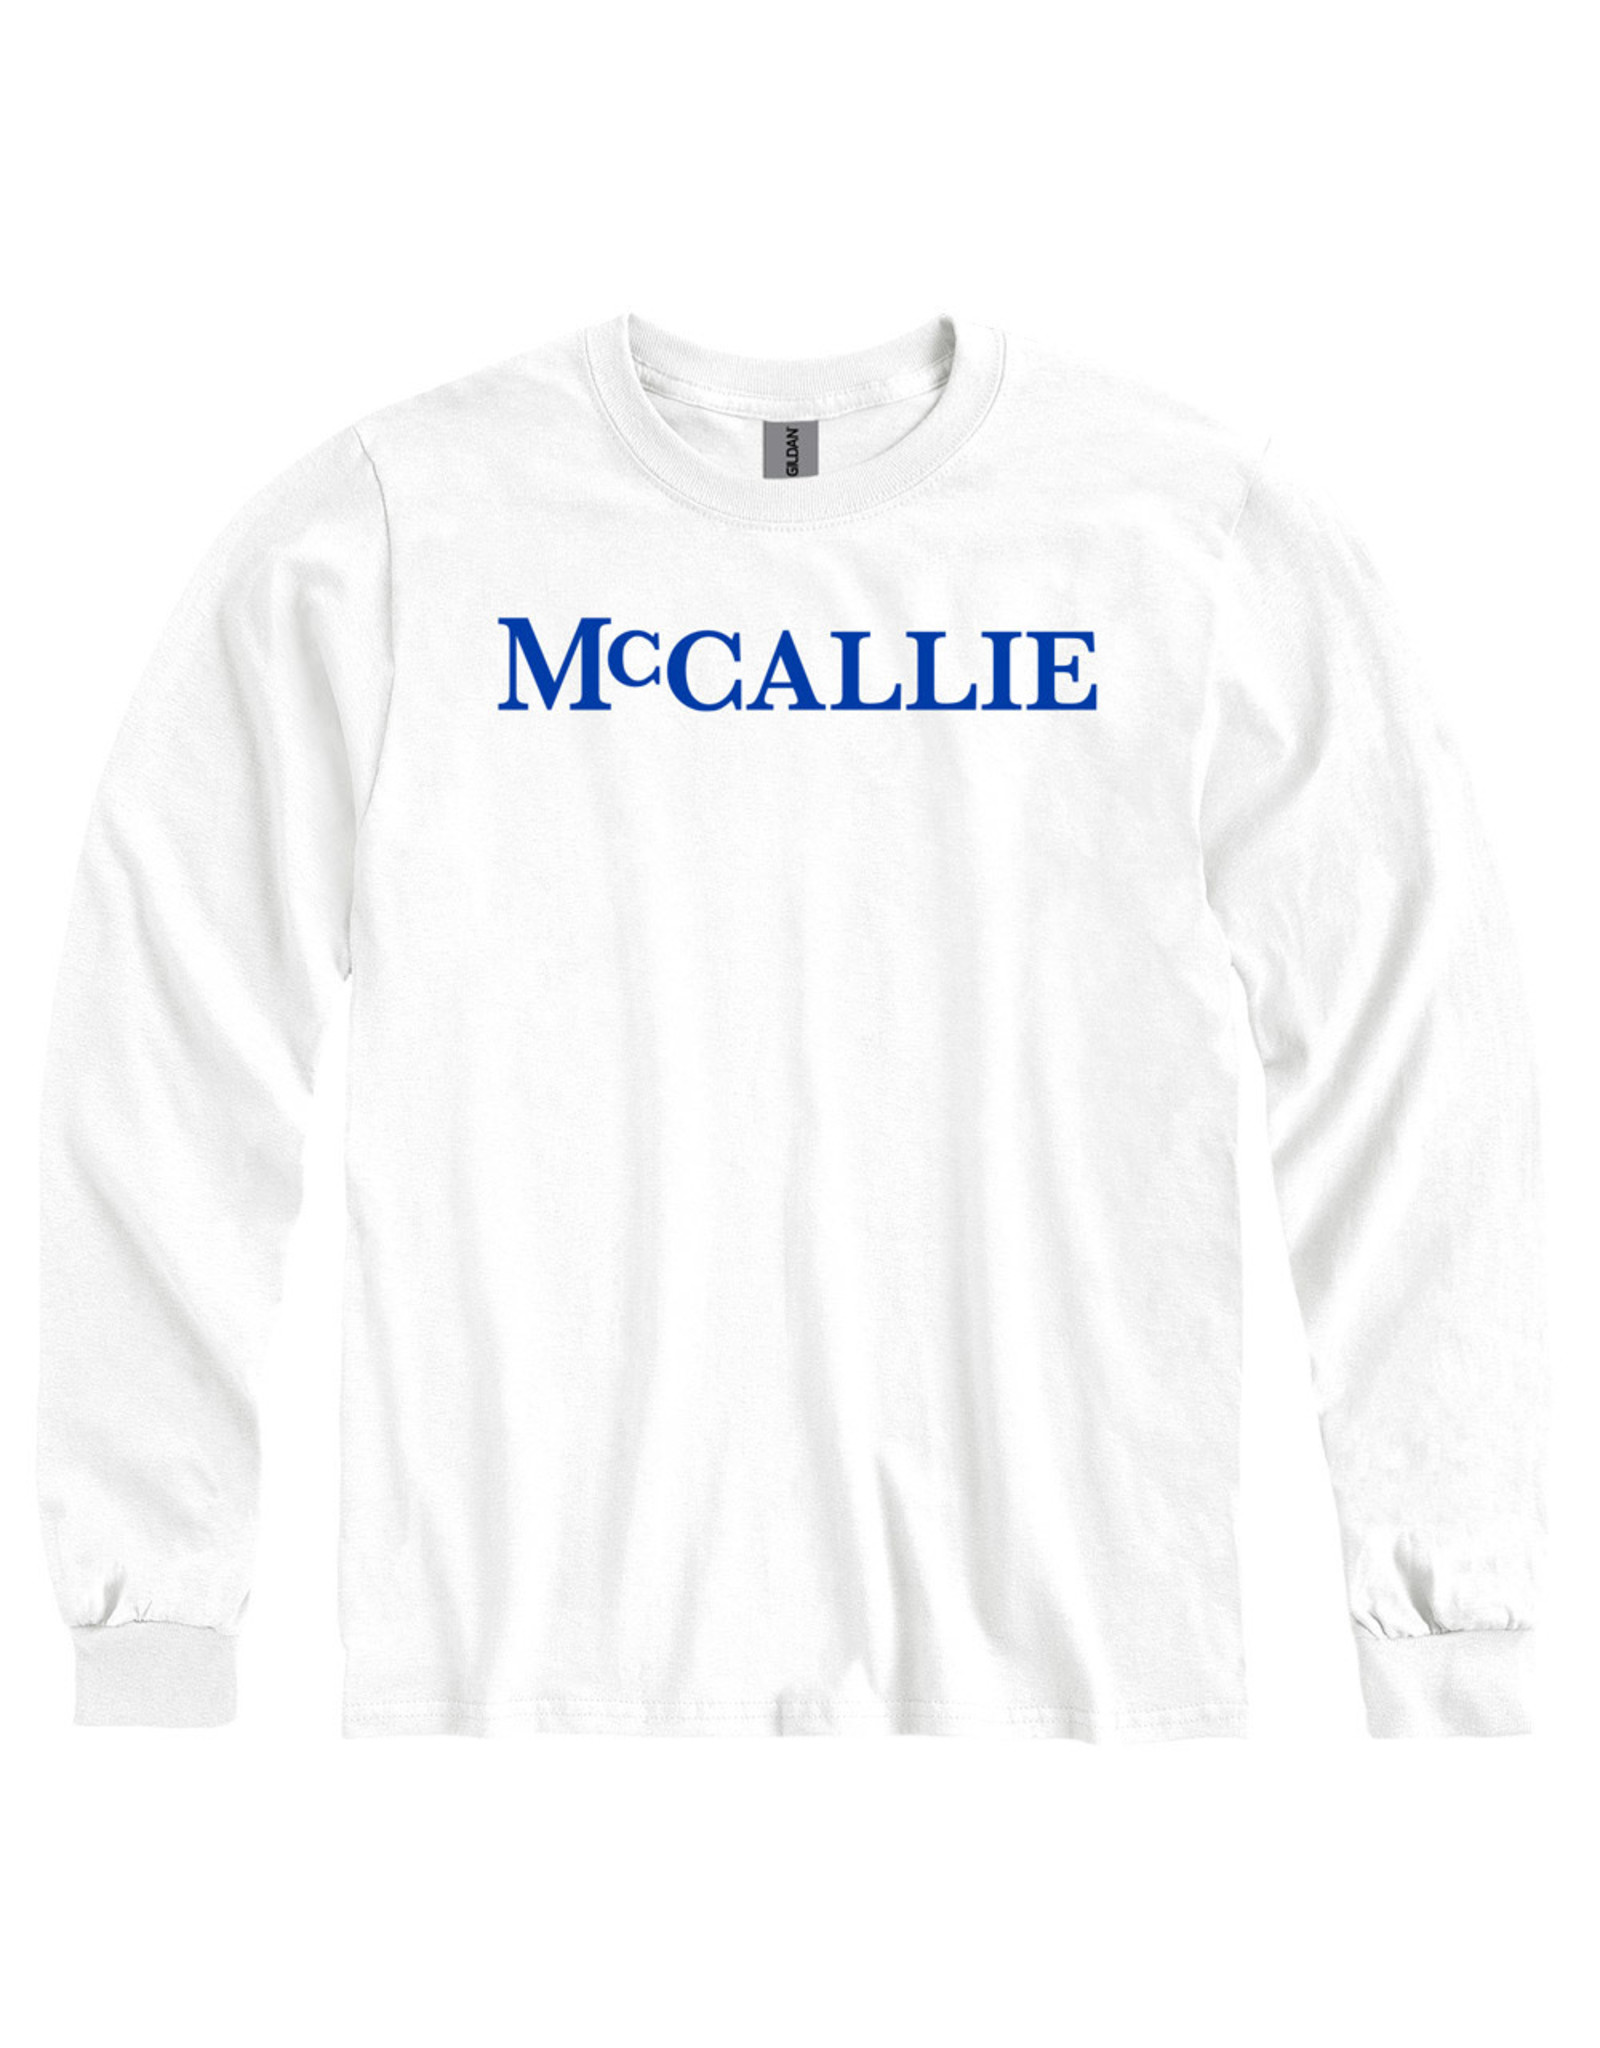 Classic White L/S McCallie Tee